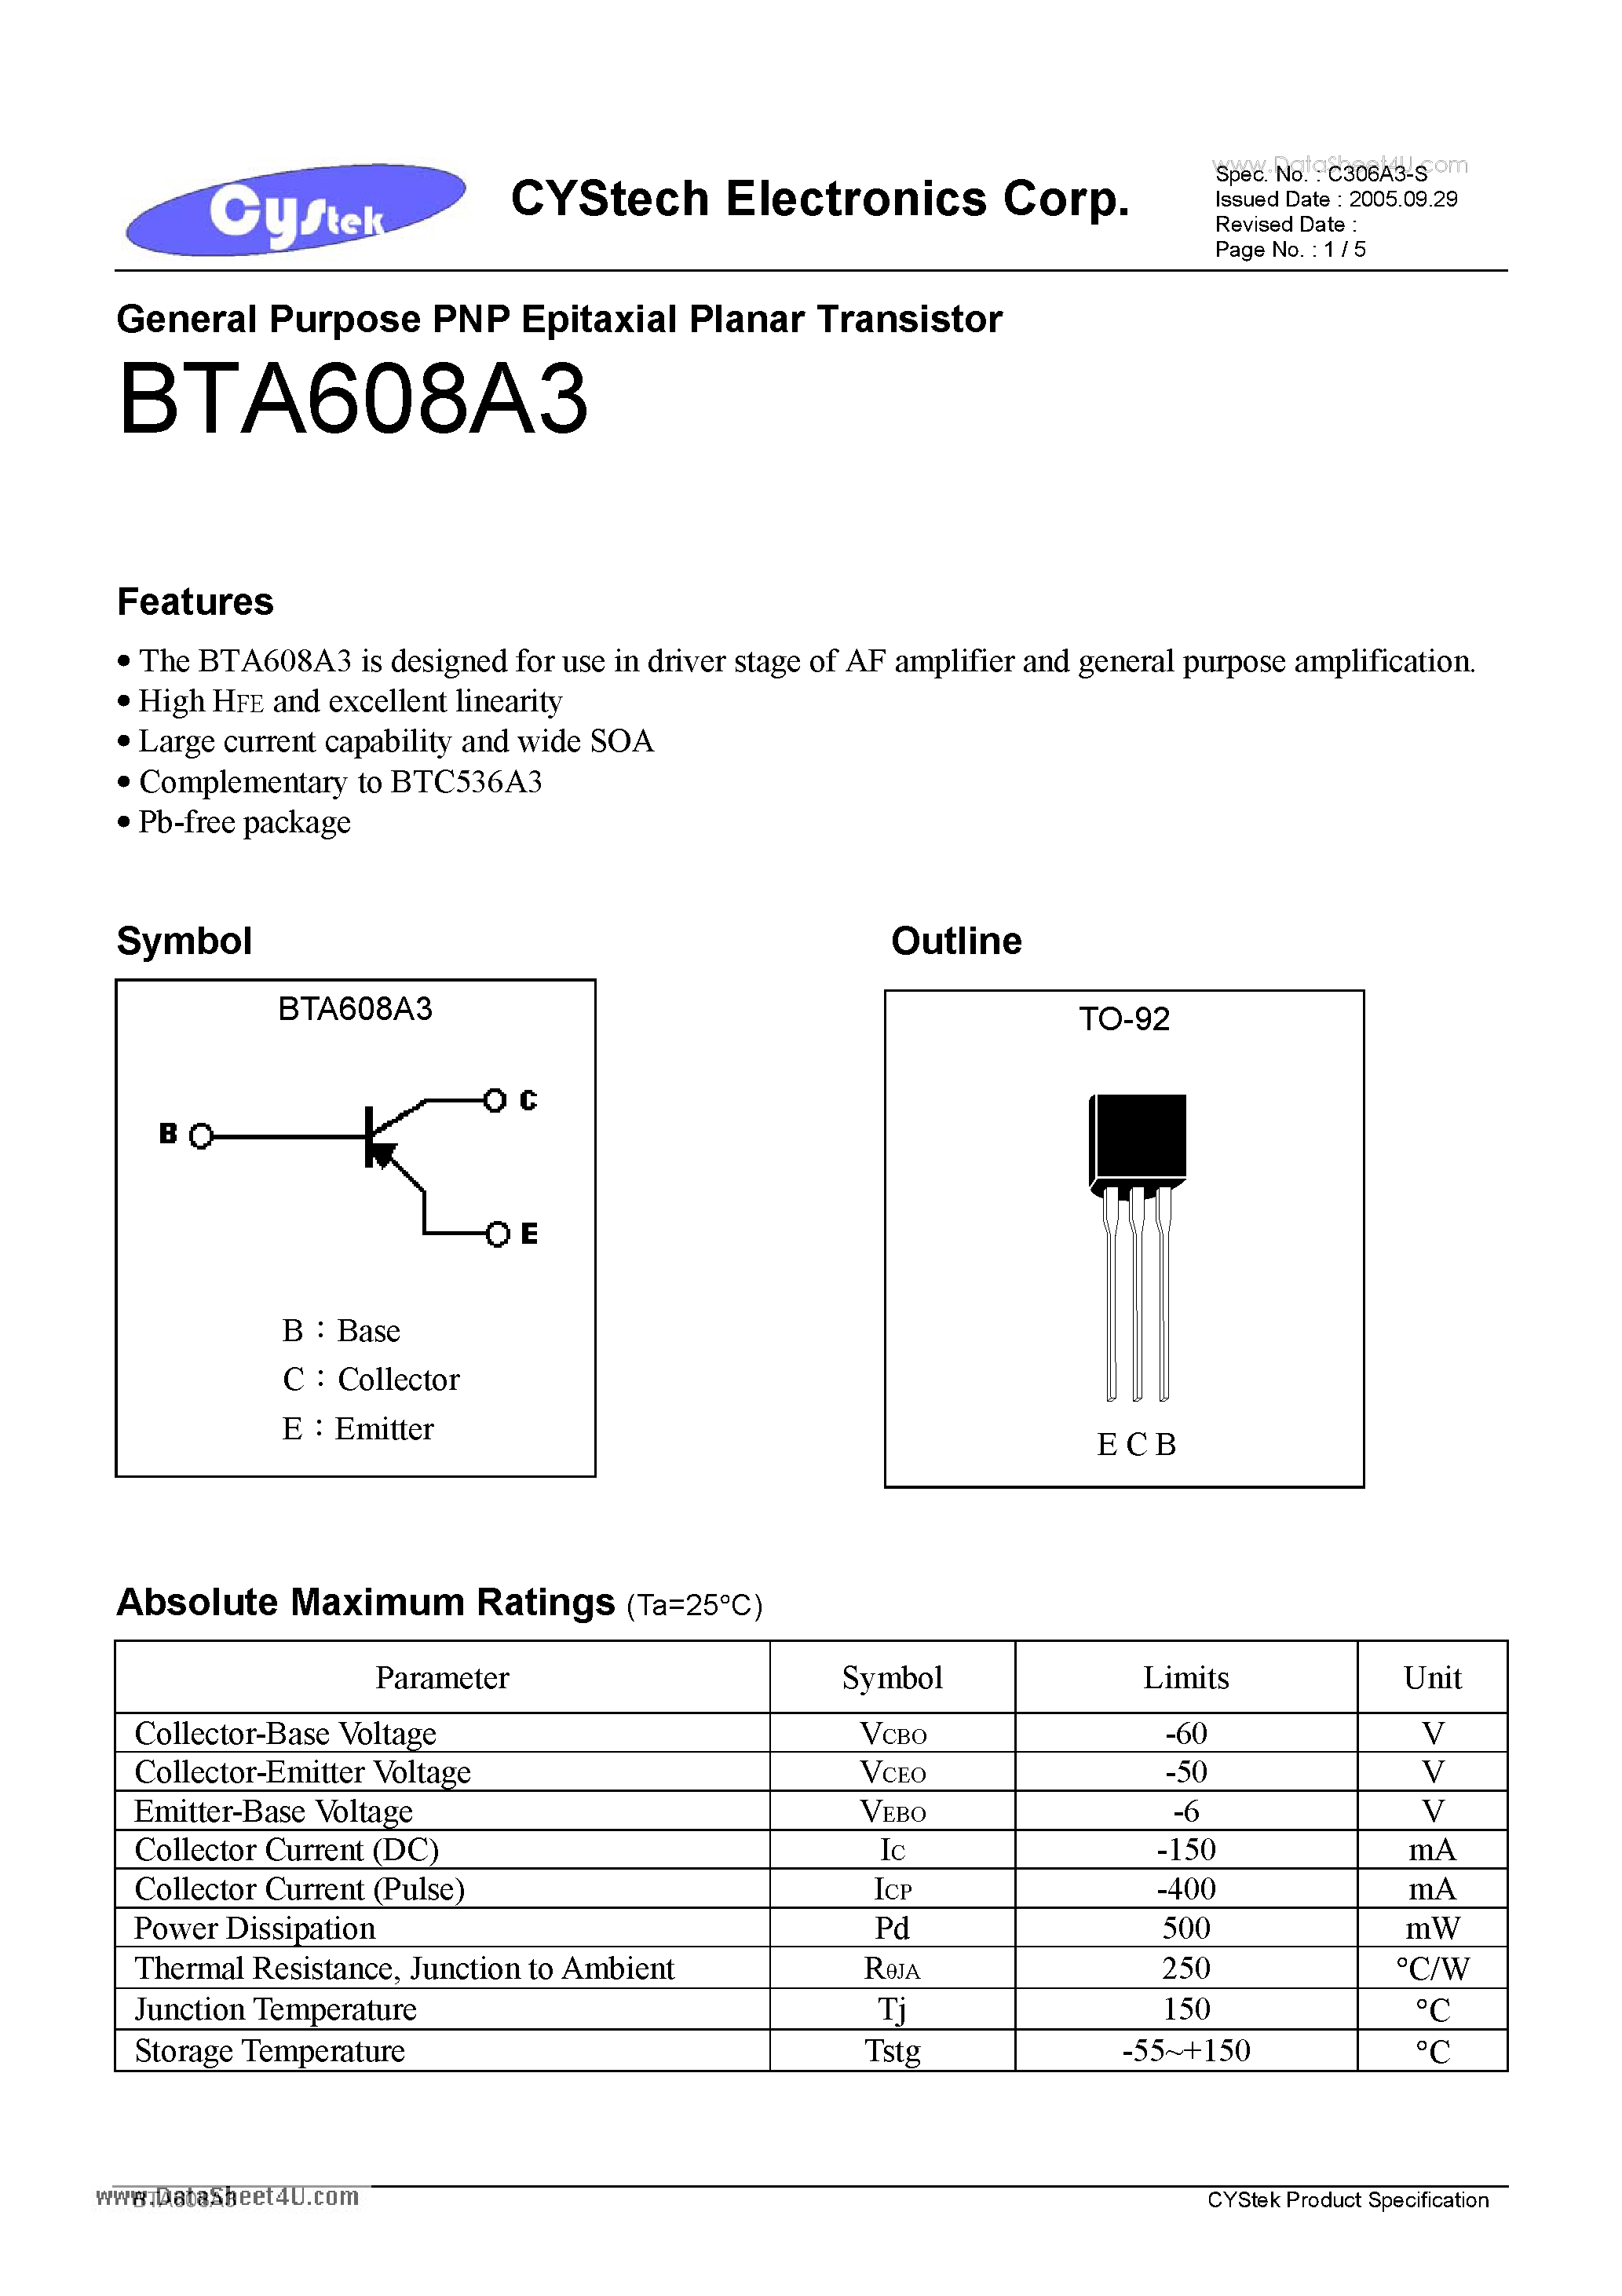 Datasheet BTA608A3 - General Purpose PNP Epitaxial Planar Transistor page 1